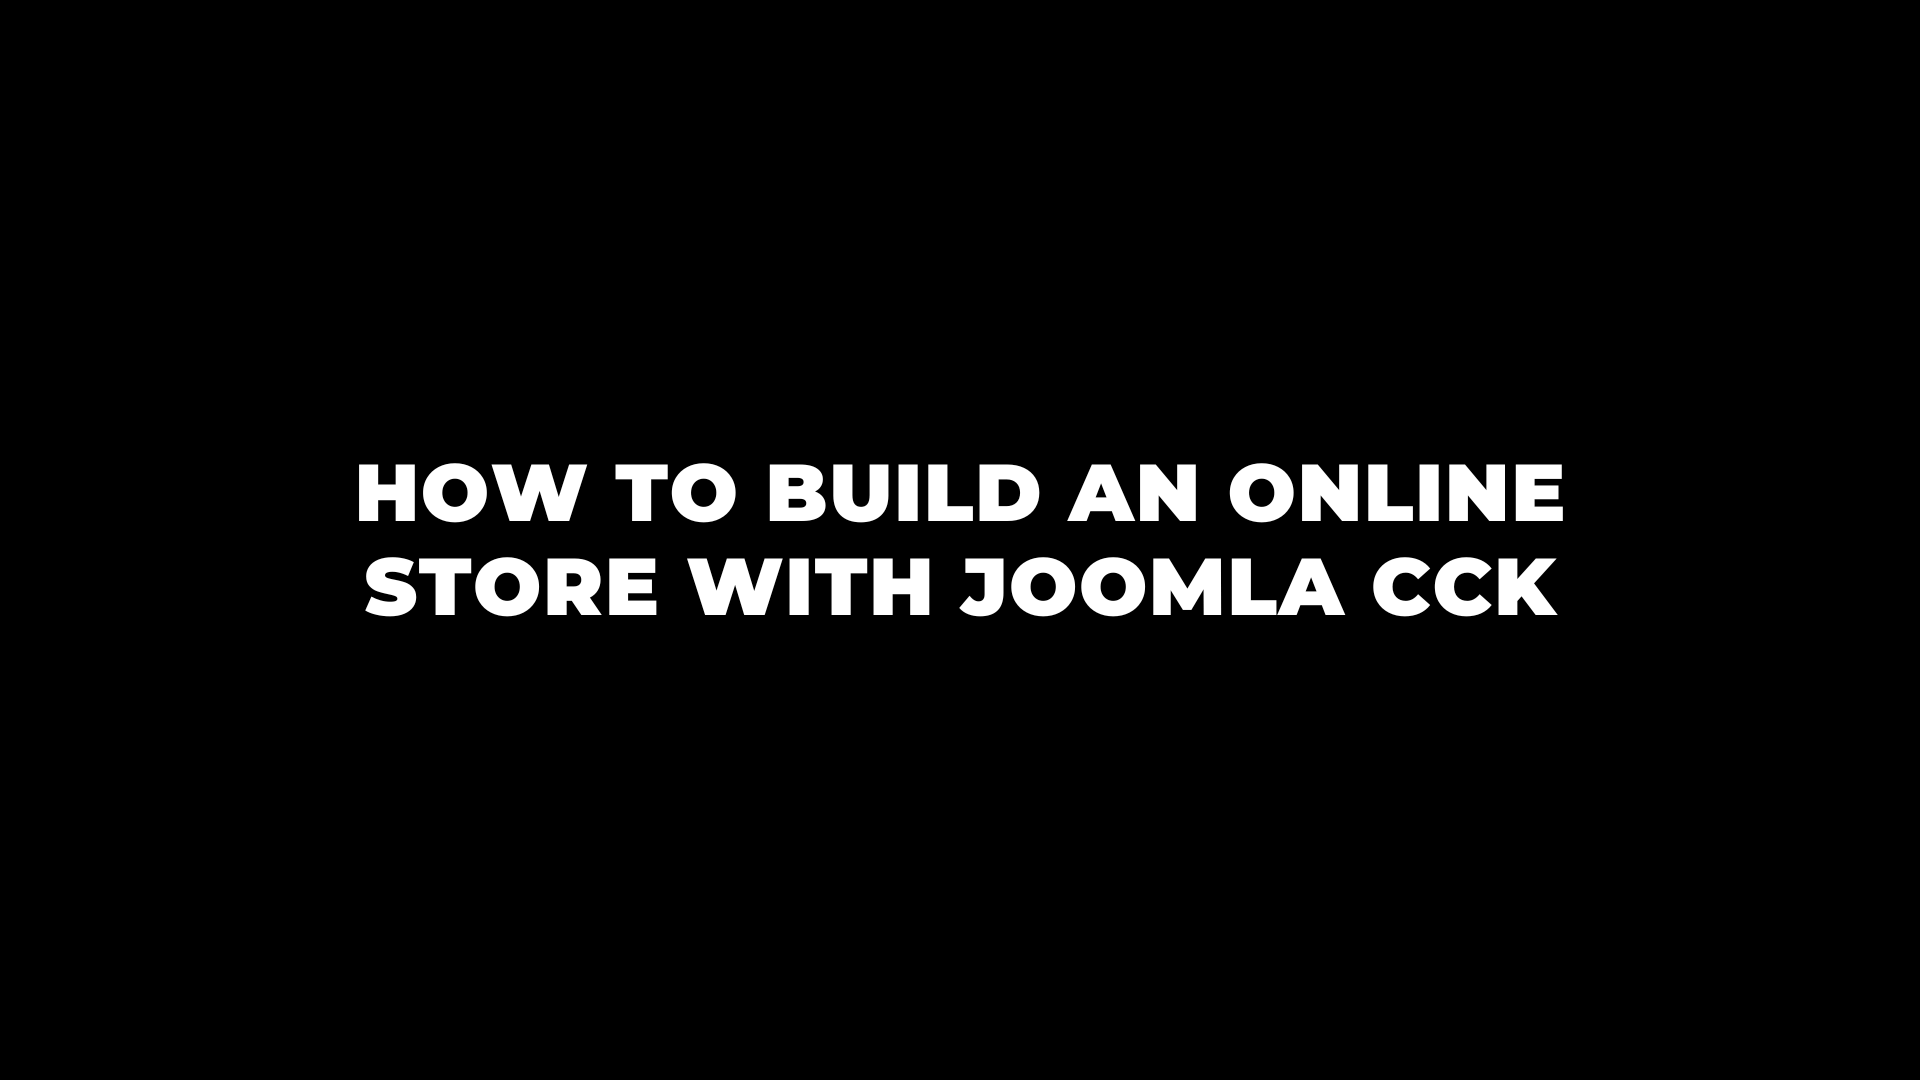 ordasoft Joomla News: How to build an online store with Joomla CCK